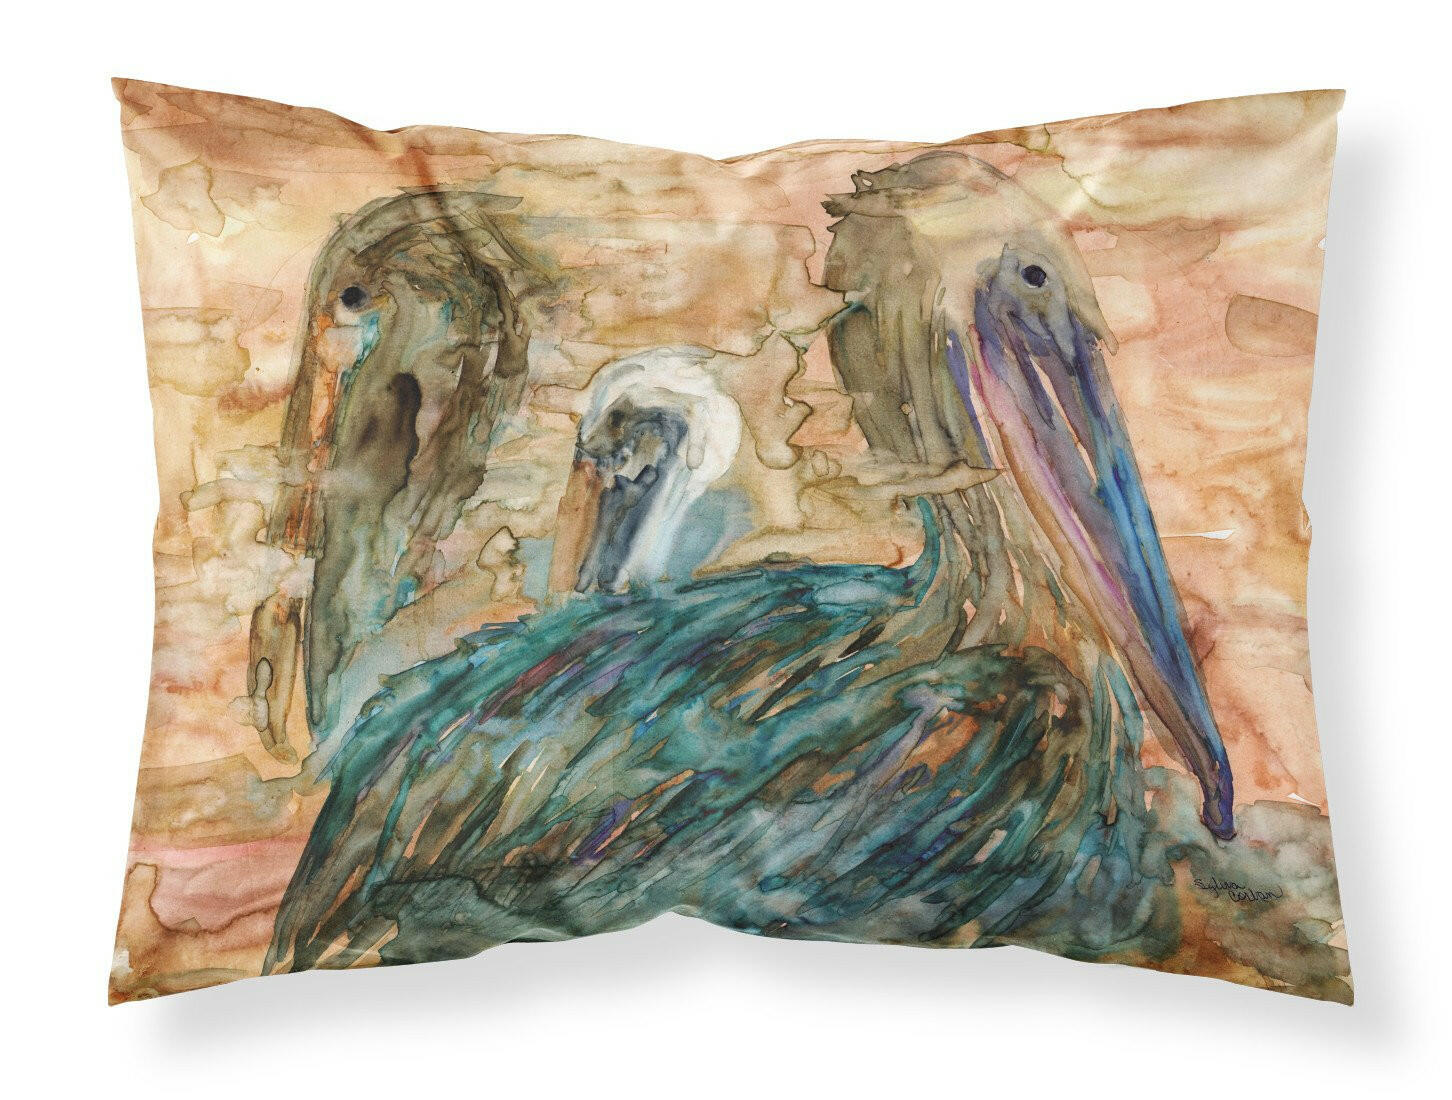 Abstract Pelicans Fabric Standard Pillowcase 8977PILLOWCASE by Caroline's Treasures